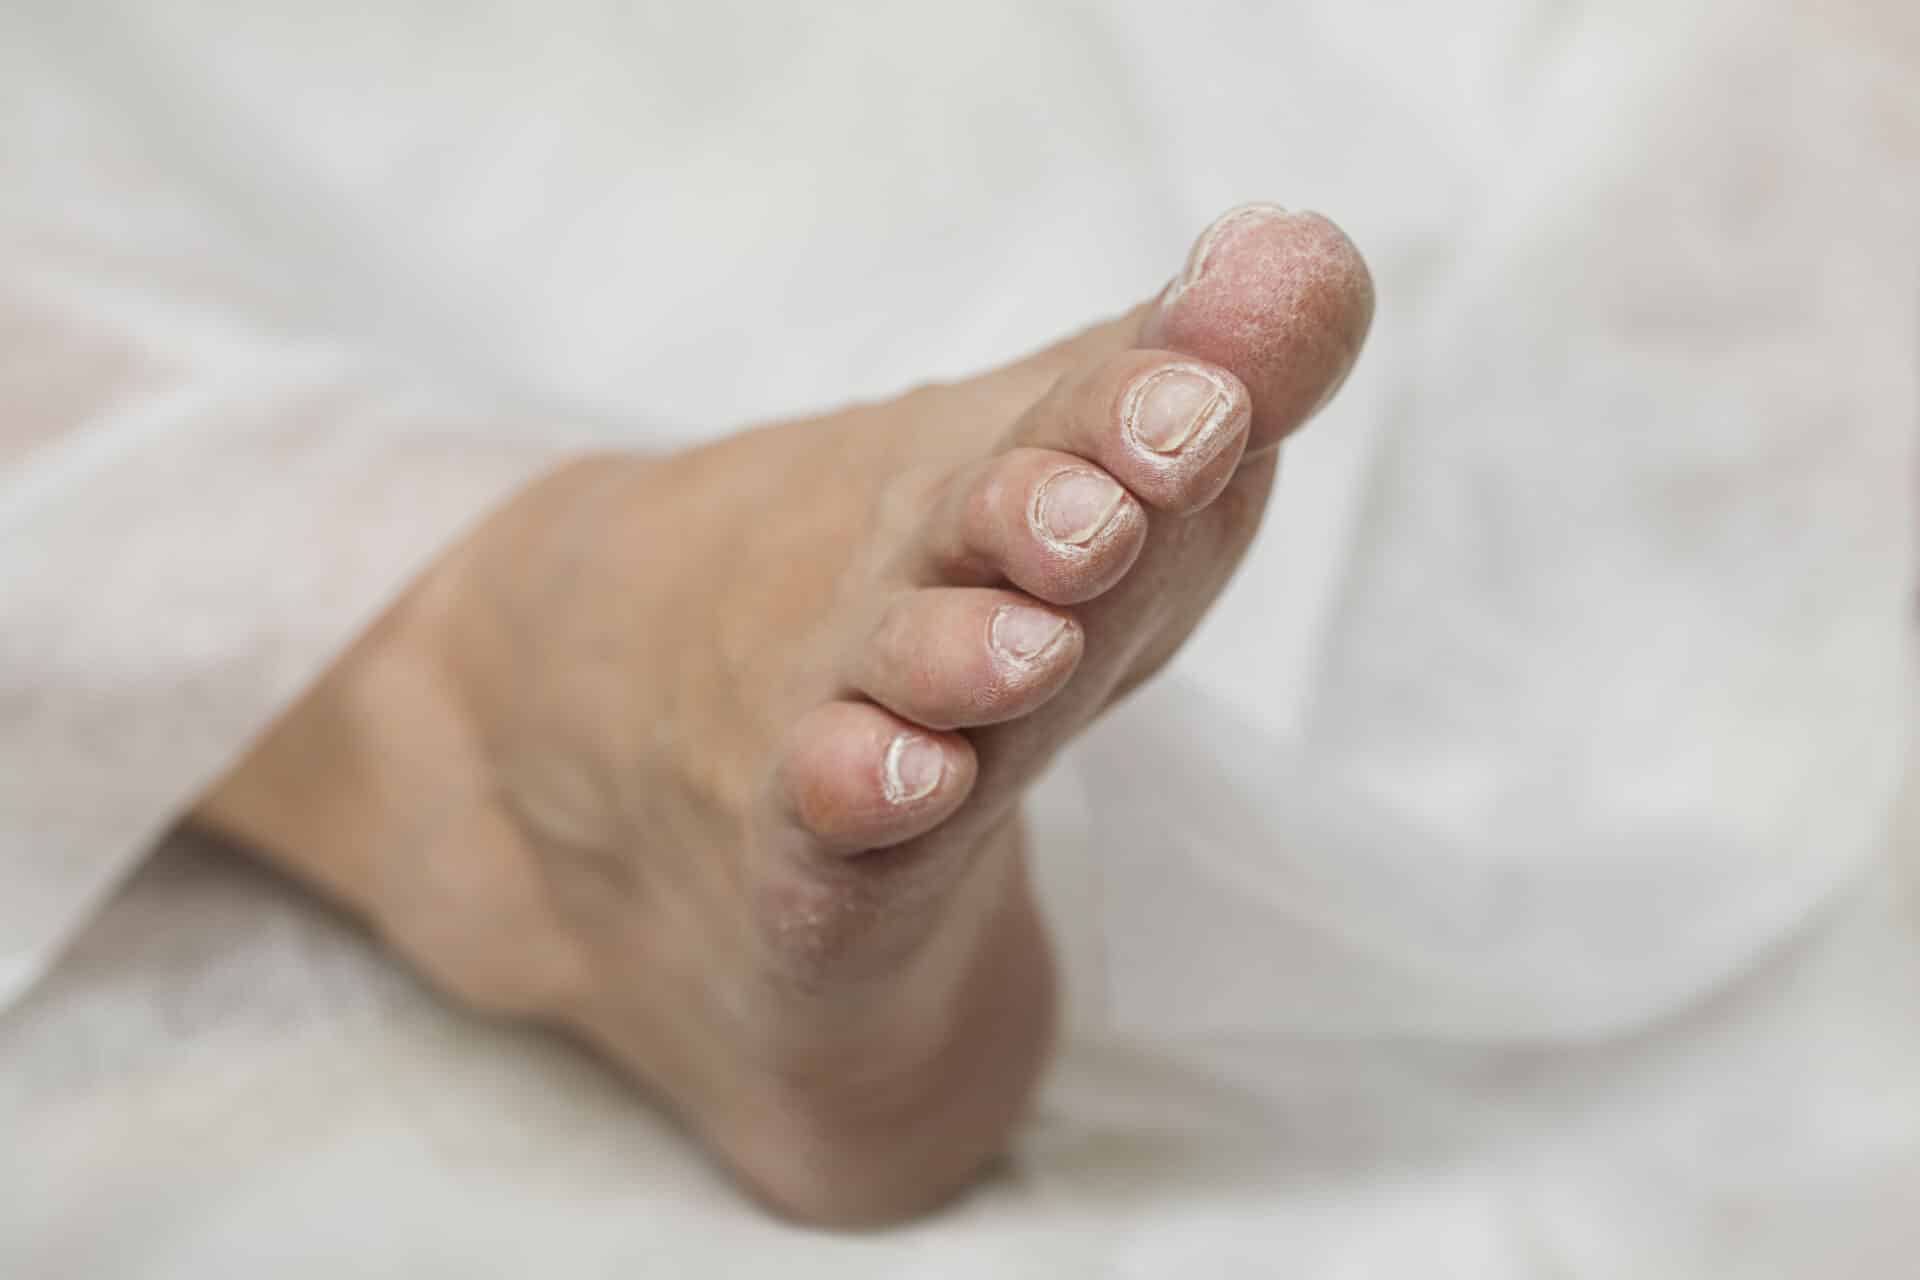 Diabetic foot - Health Tips, Diabetic foot Health Articles, Health News |  TheHealthSite.com